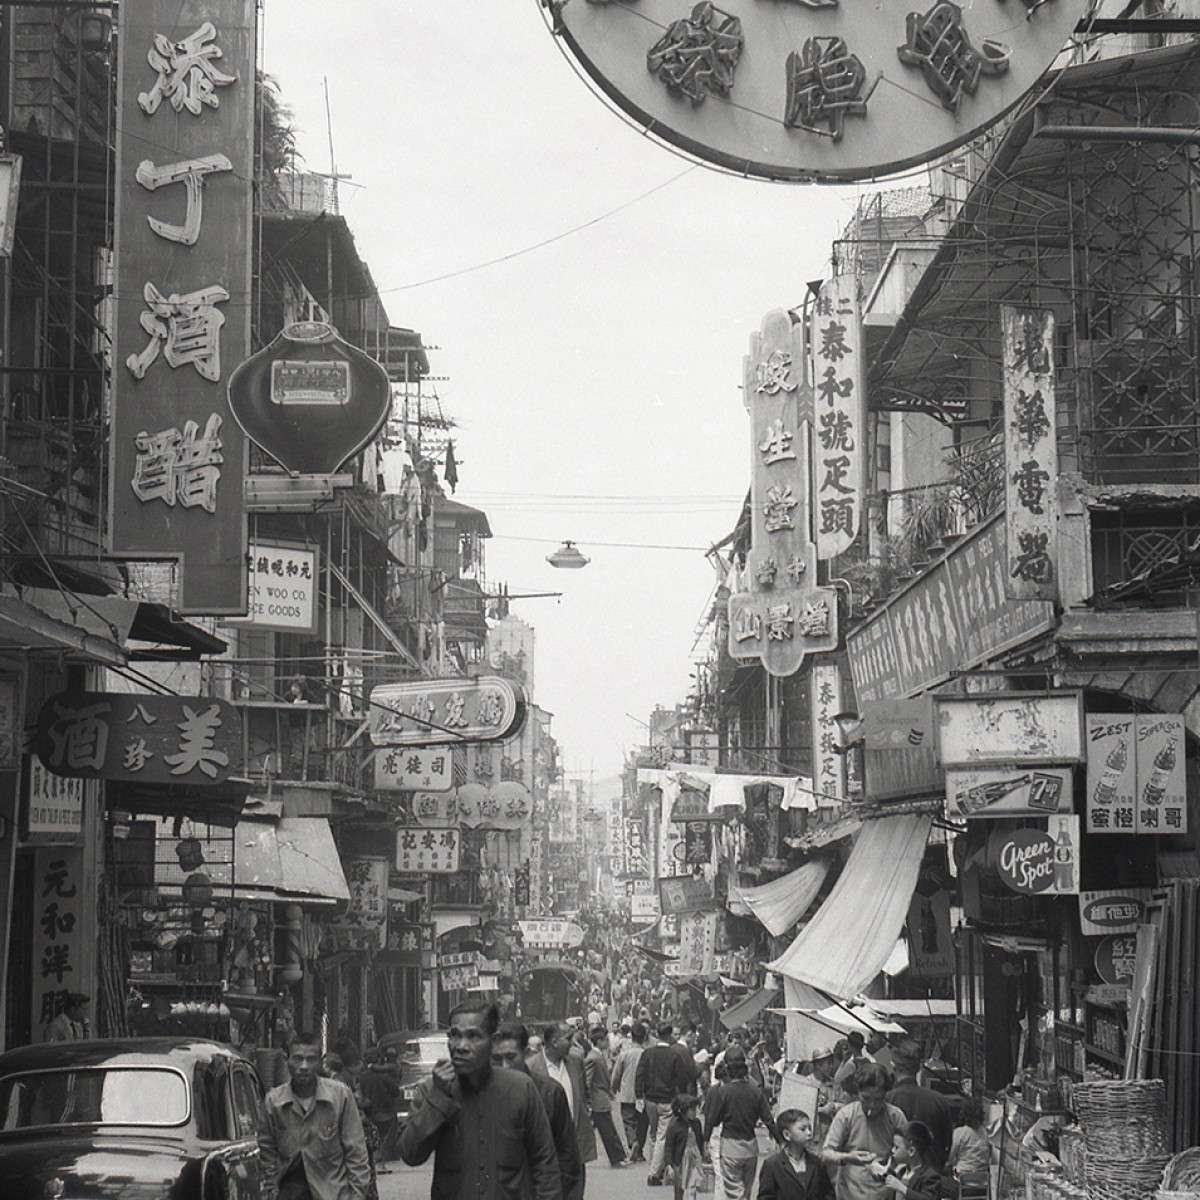 Fototapet rotund Hong Kong the Old Days, 190cm diametru, WallArt, Fototapet circular, Fototapet 